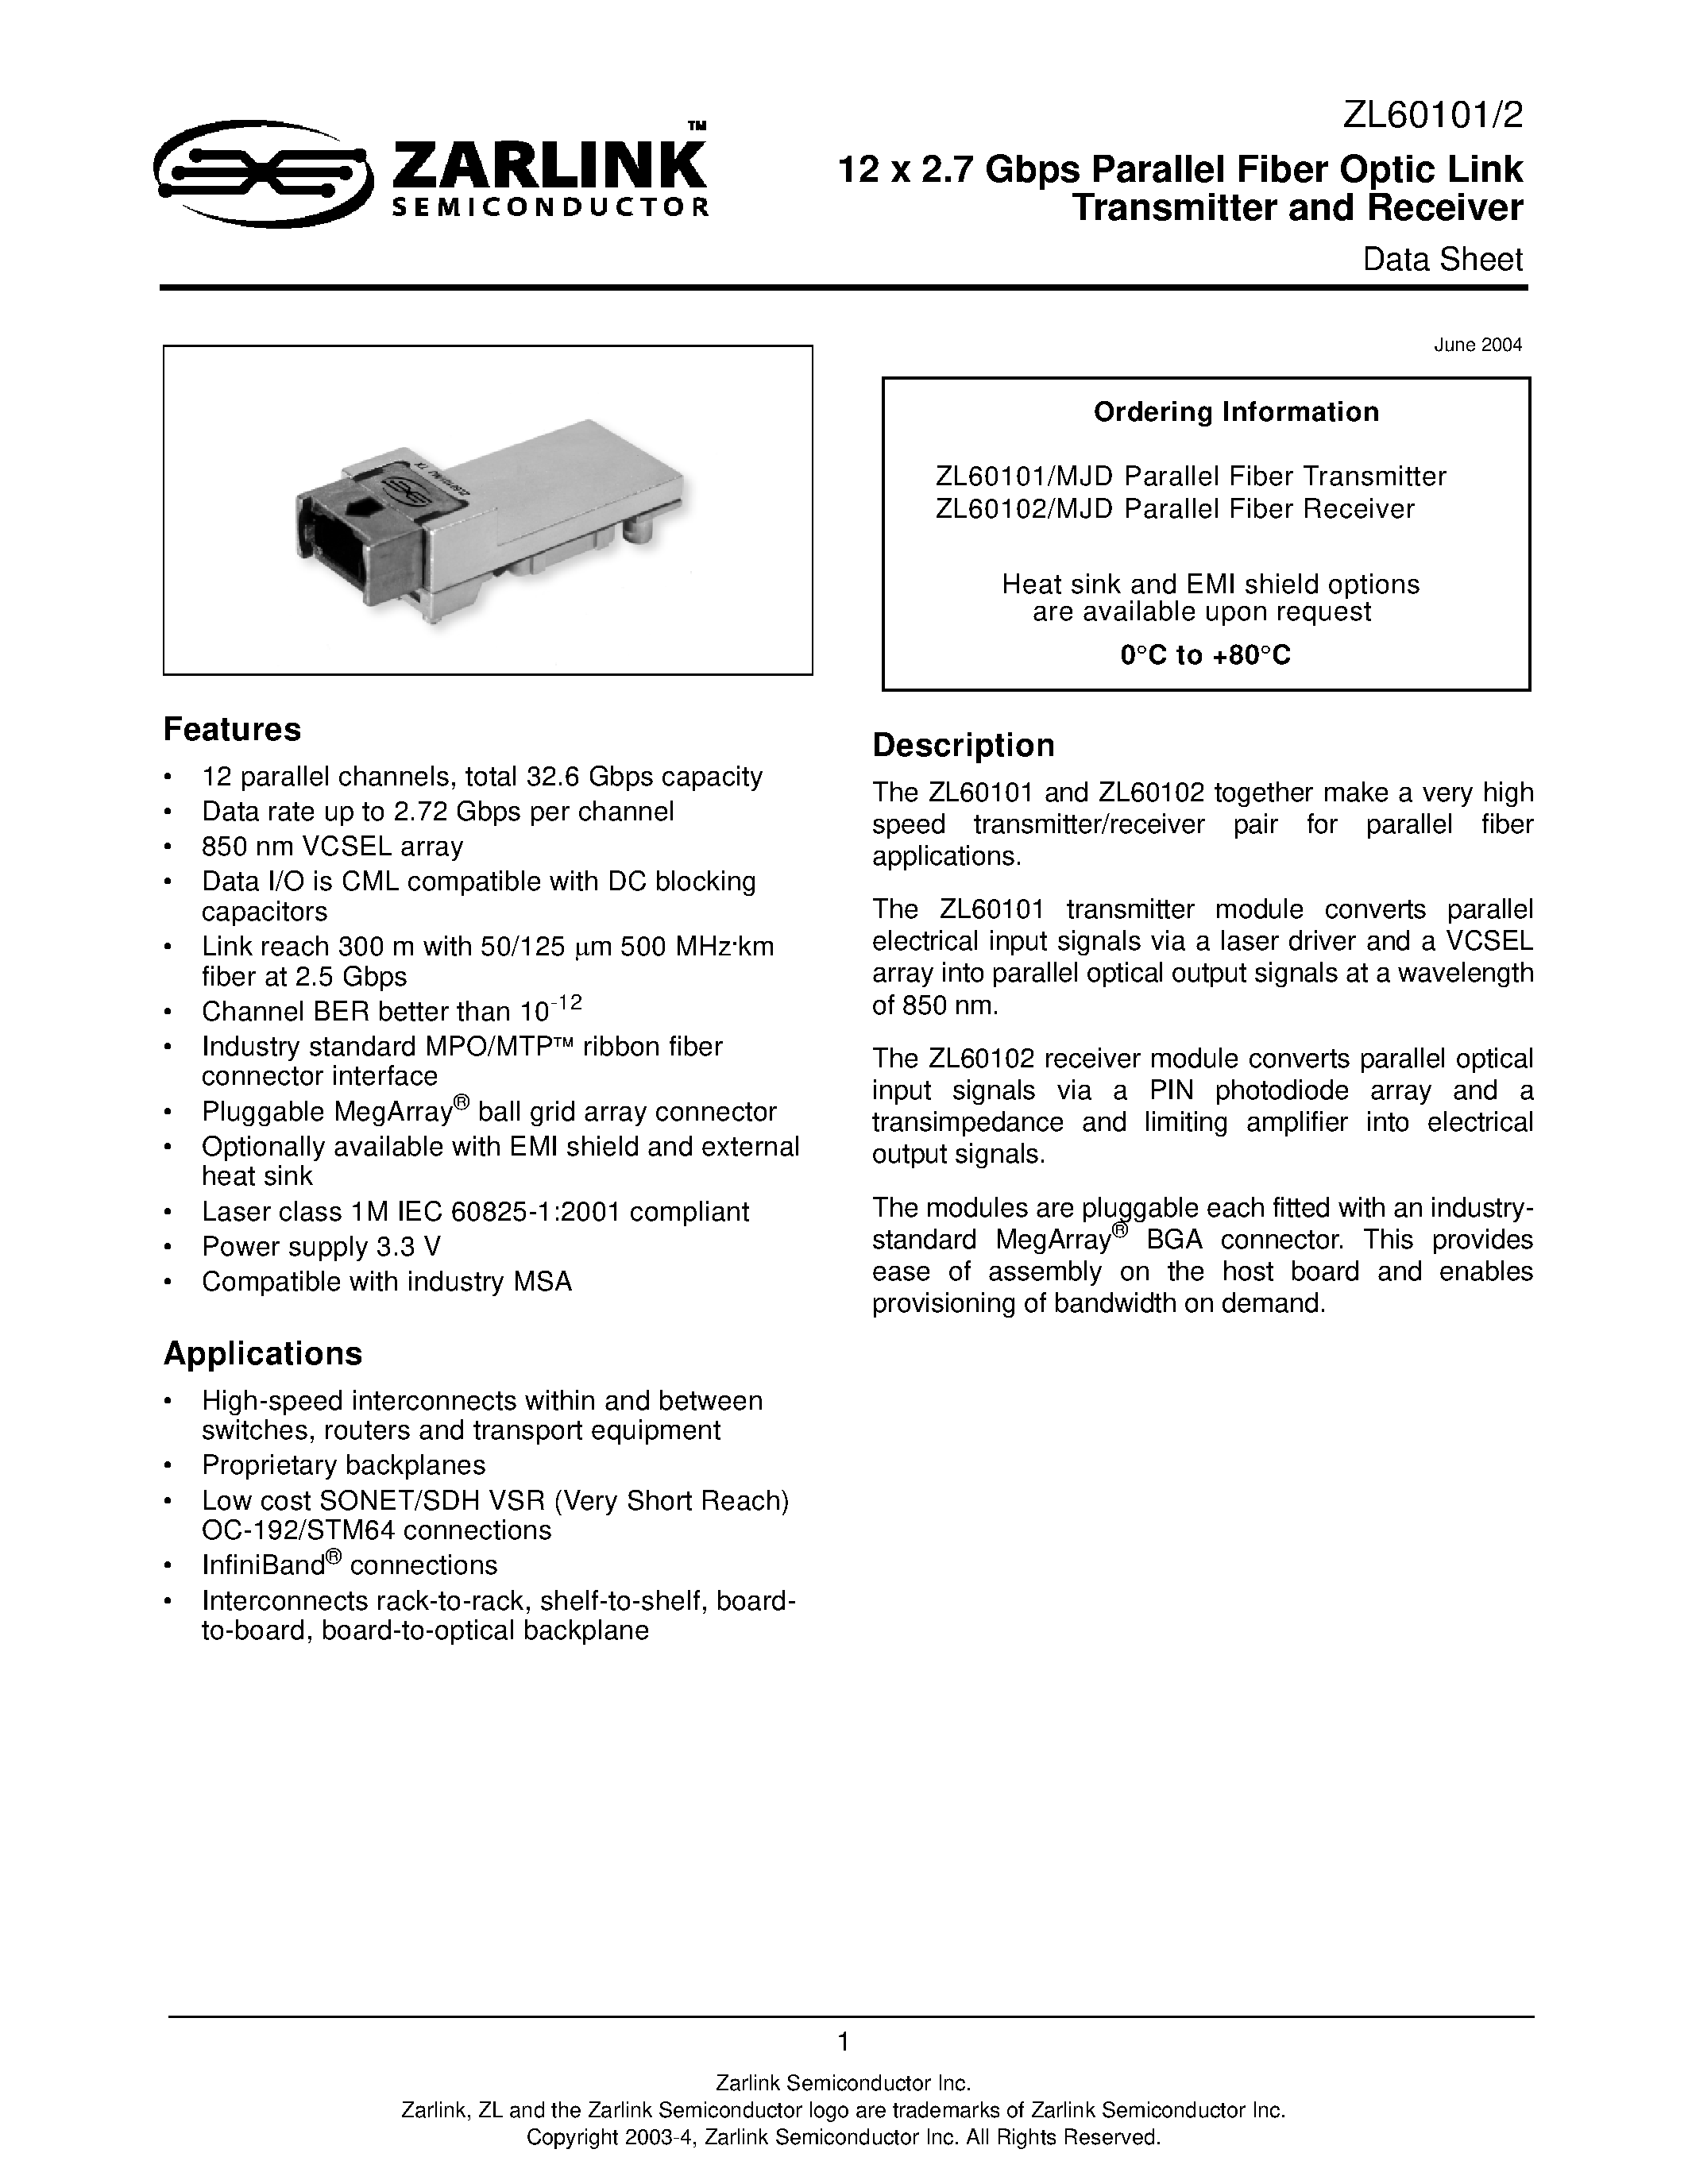 Даташит ZL60101 - (ZL60101 / ZL60102) 12 x 2.7 Gbps Parallel Fiber Optic Link Transmitter and Receiver страница 1